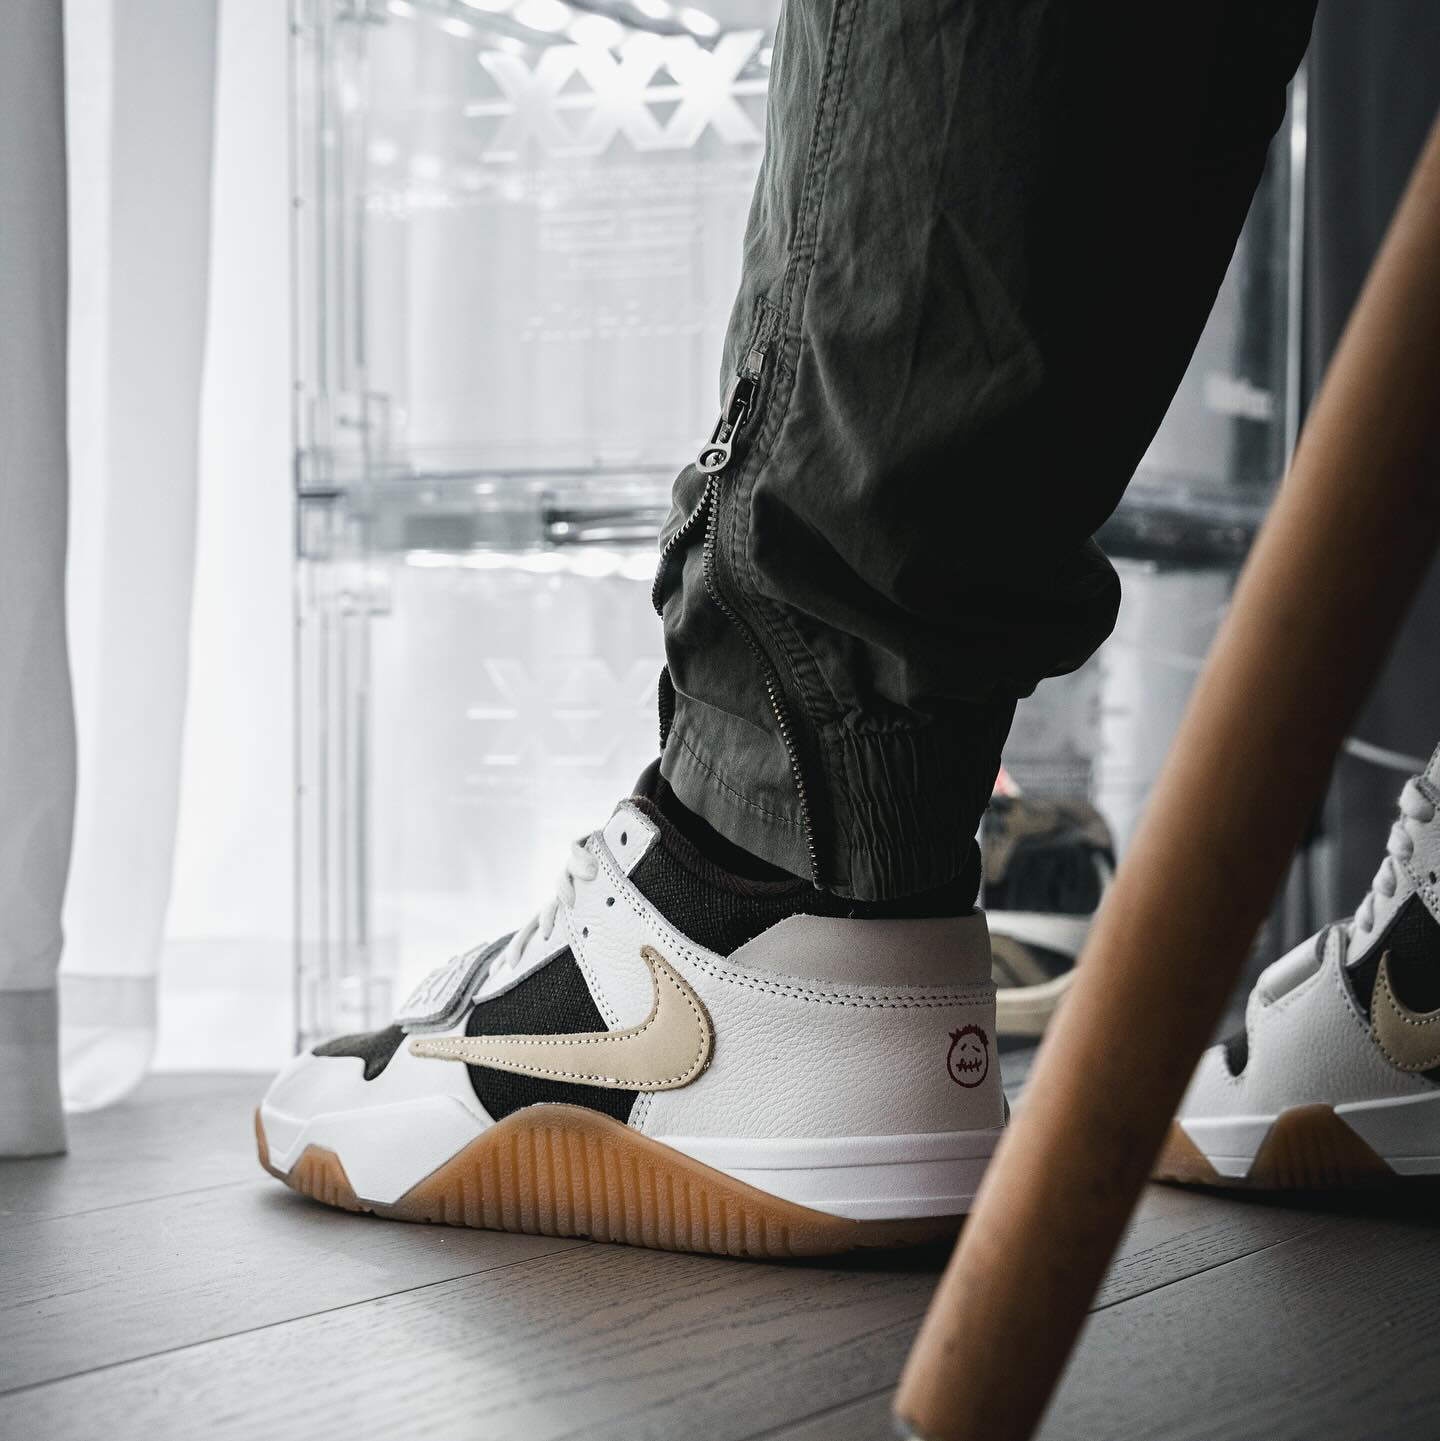 Travis Scott's Jumpman Jack Jordan beige, white, and black sneakers seen on-feet